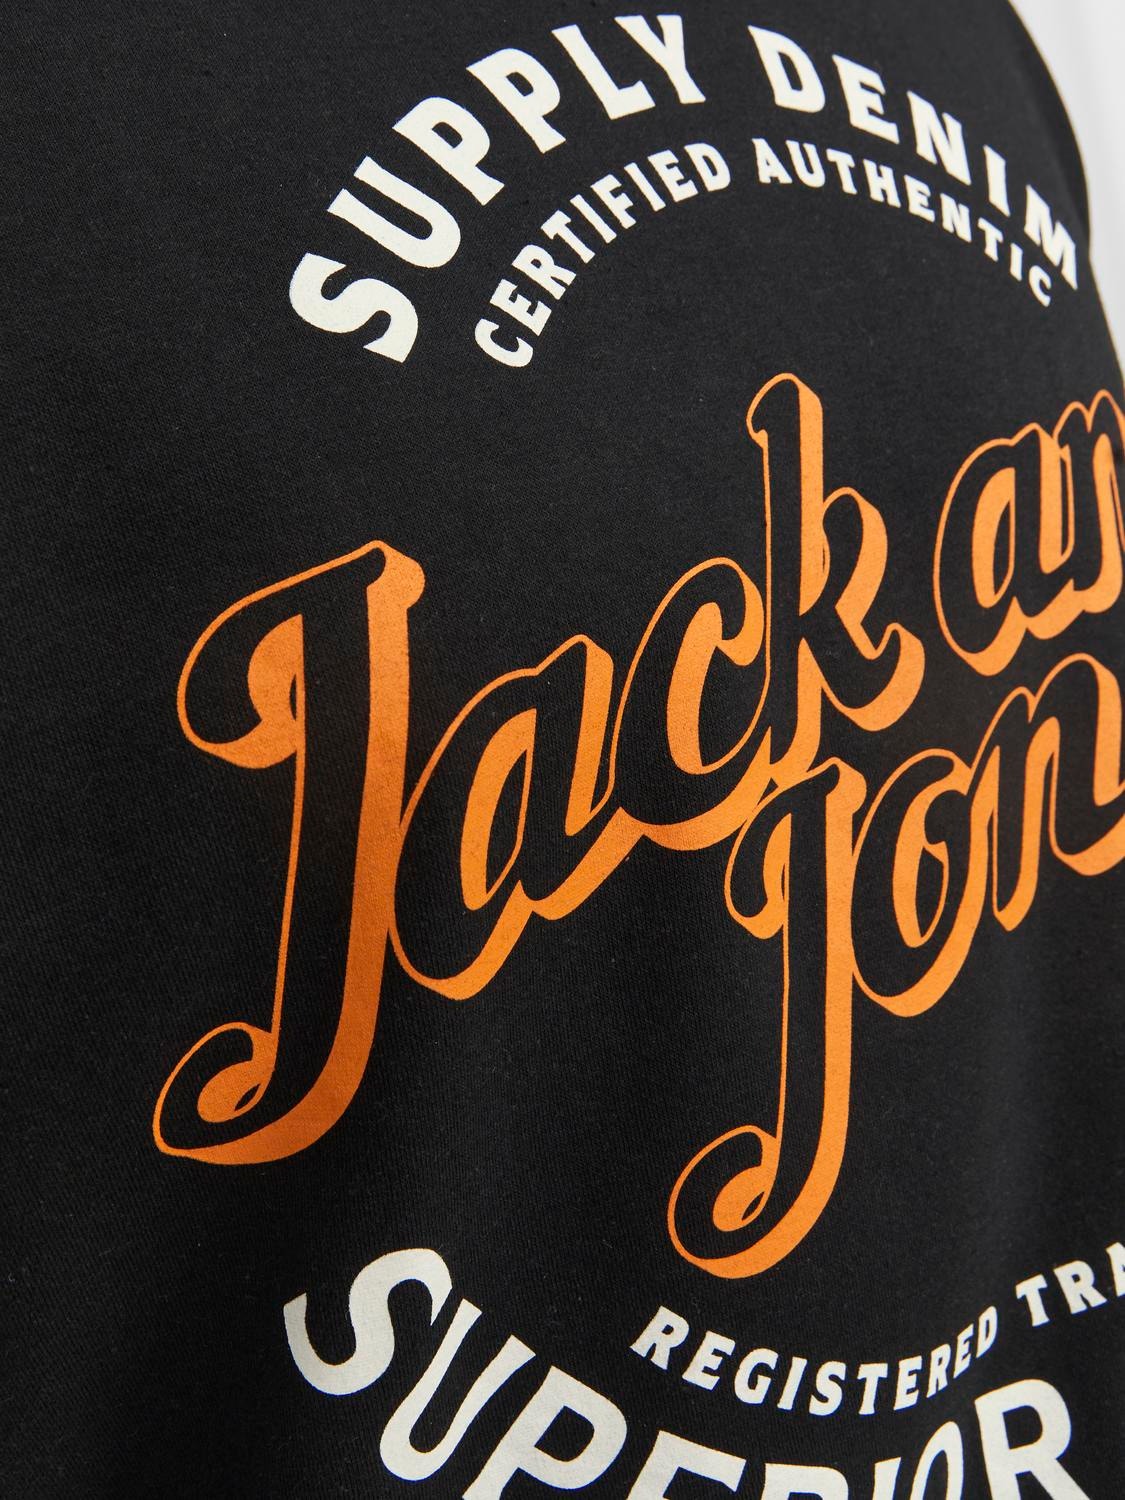 Jack & Jones Plus Size Logo Crew neck Sweatshirt -Black - 12245502